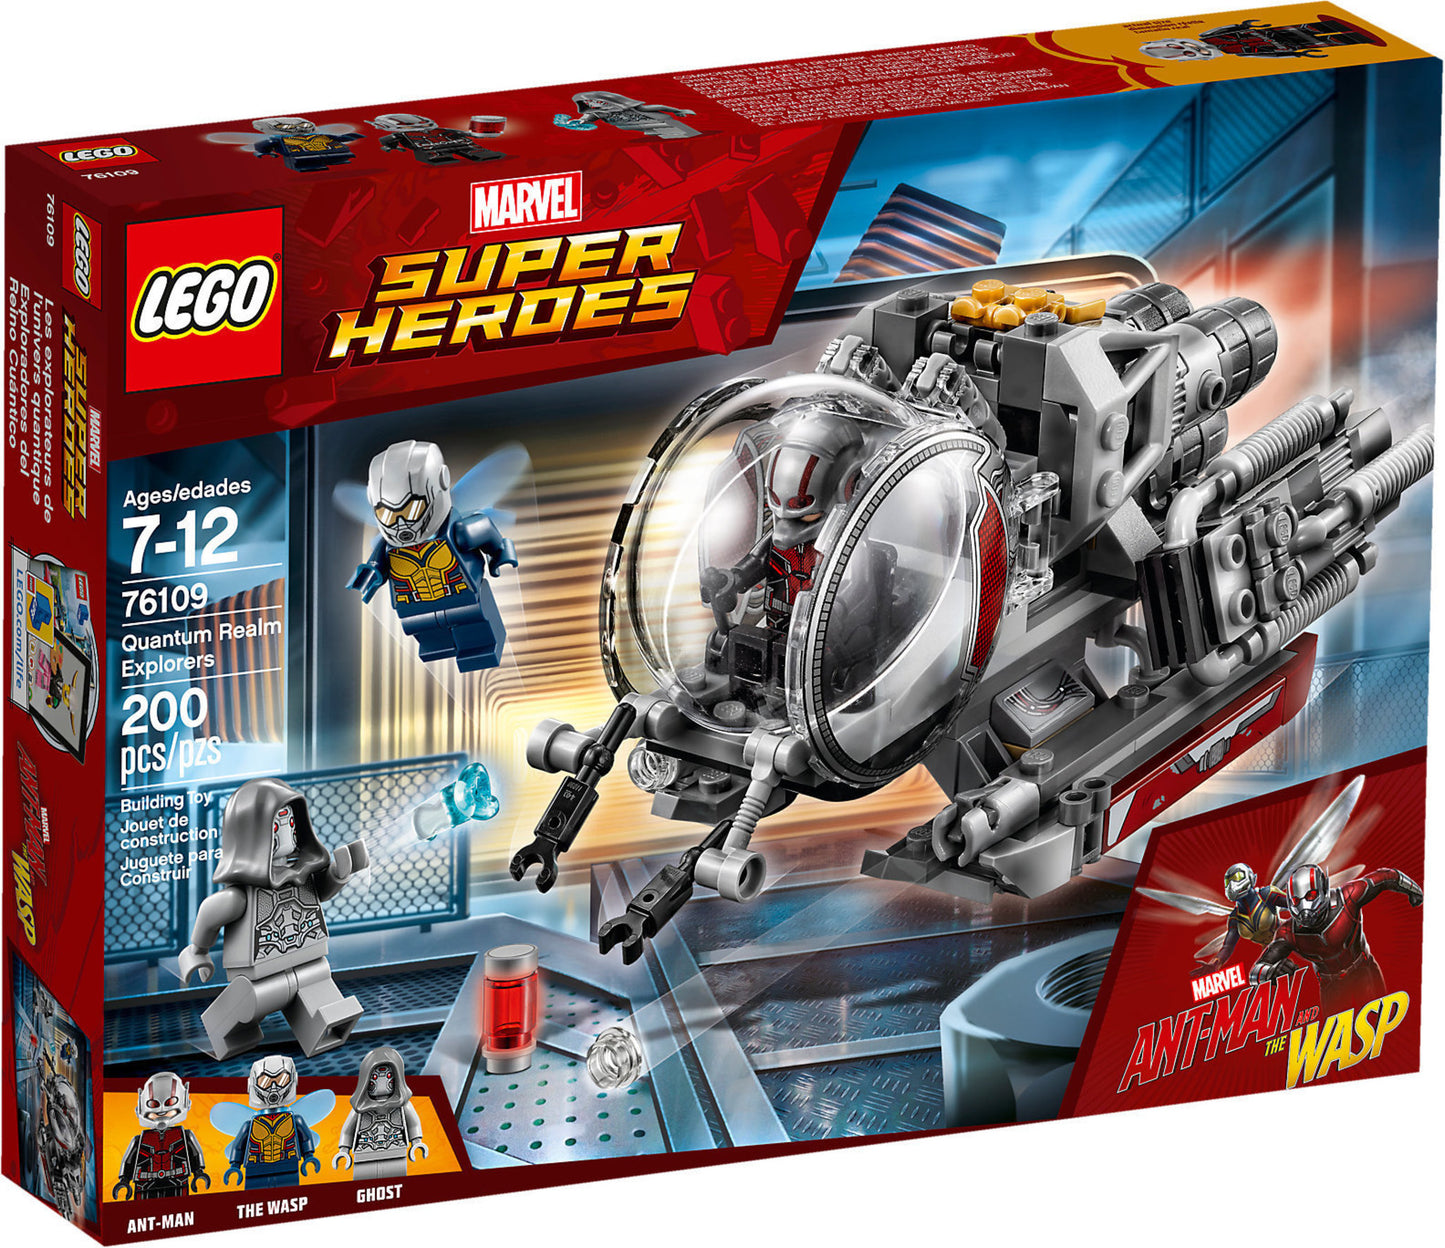 76109 LEGO Marvel Super Heroes - Esploratori Del Regno Quantico